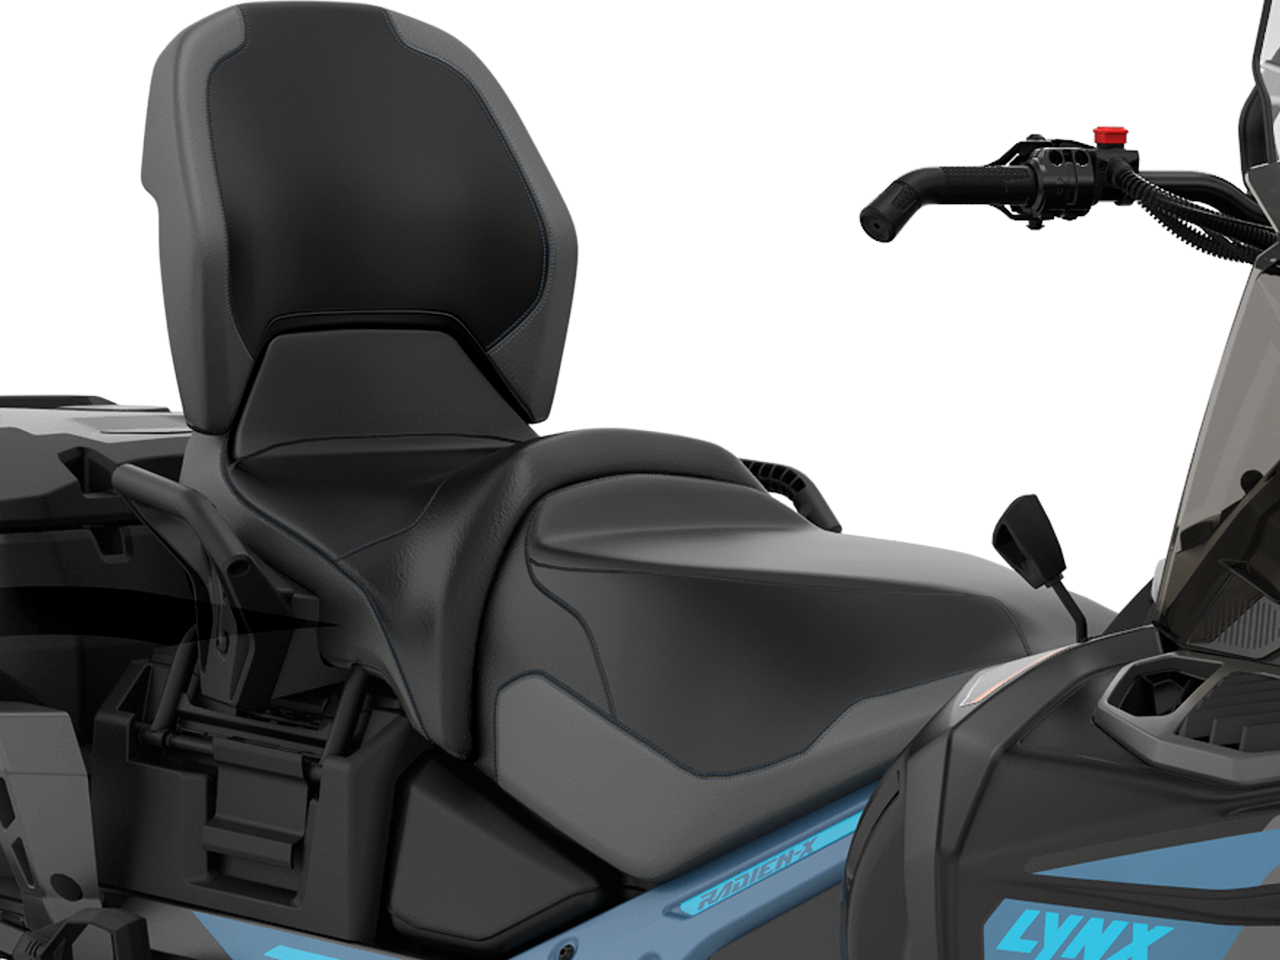 Lynx Commander Modular sedež